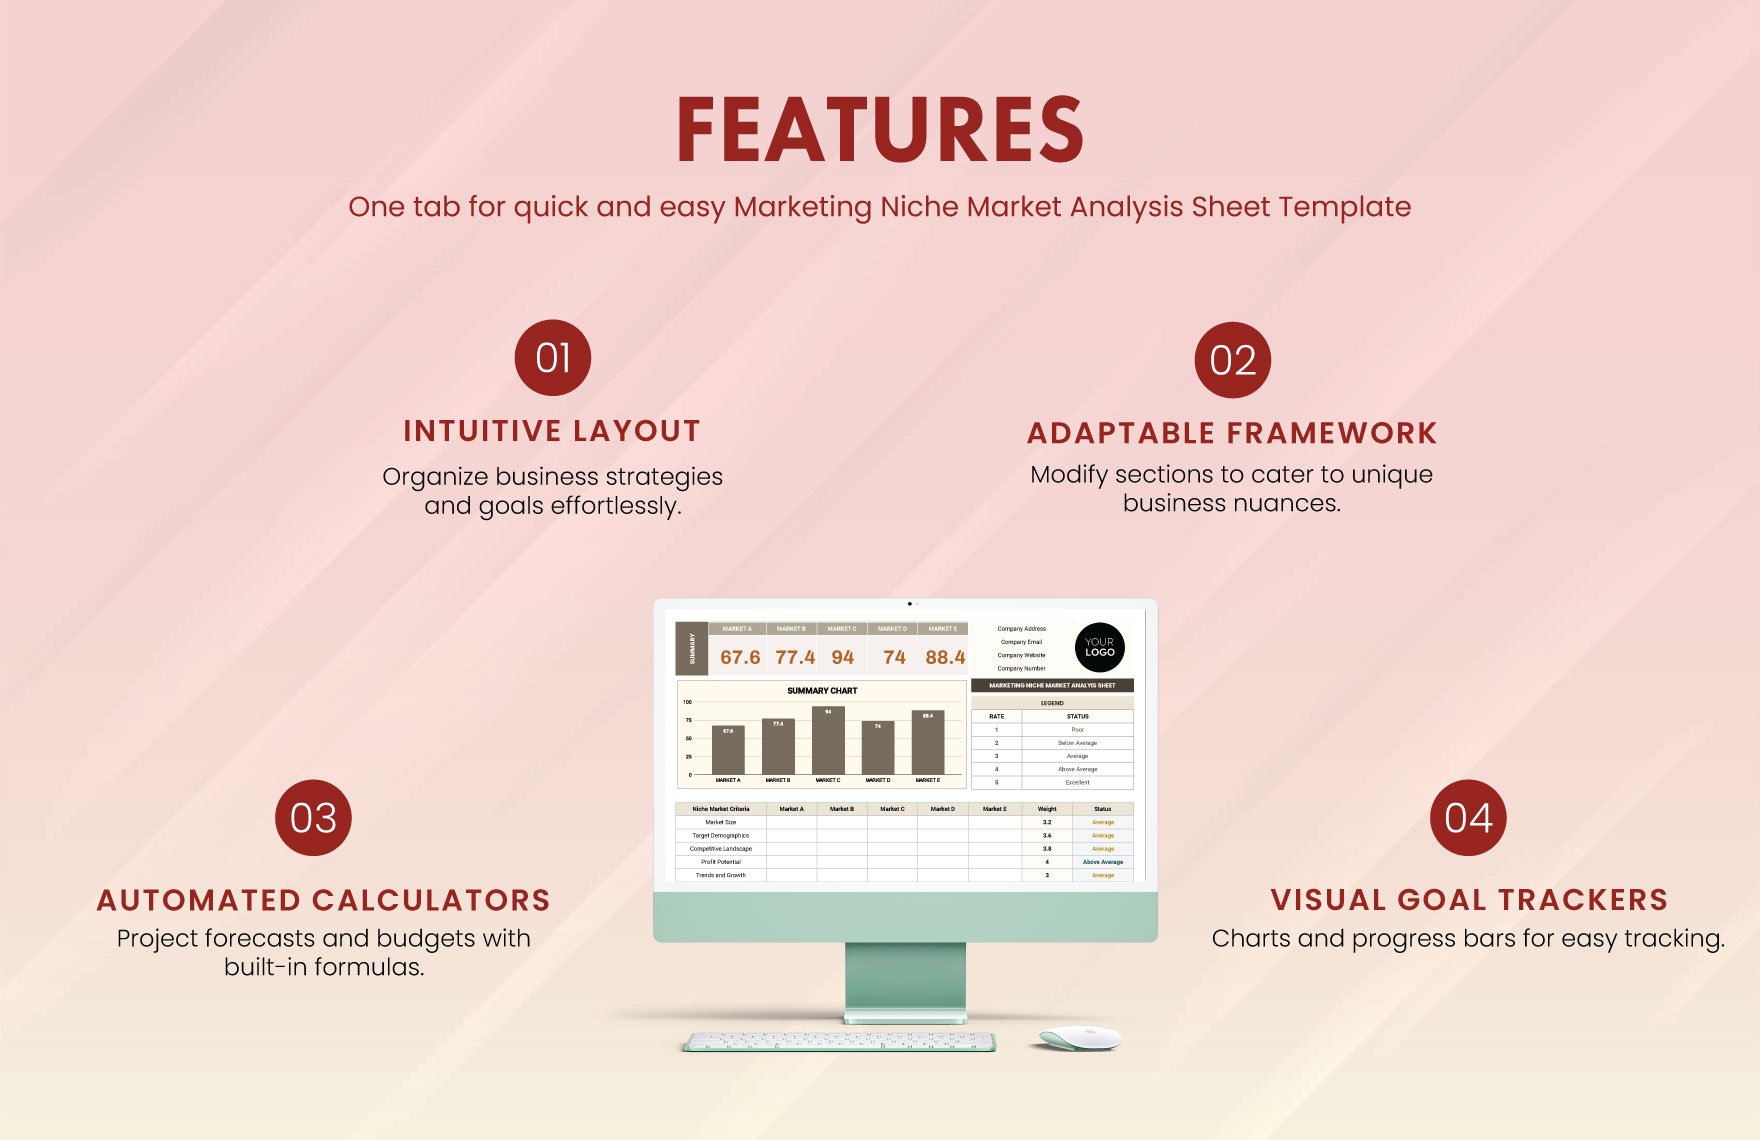 Marketing Niche Market Analysis Sheet Template